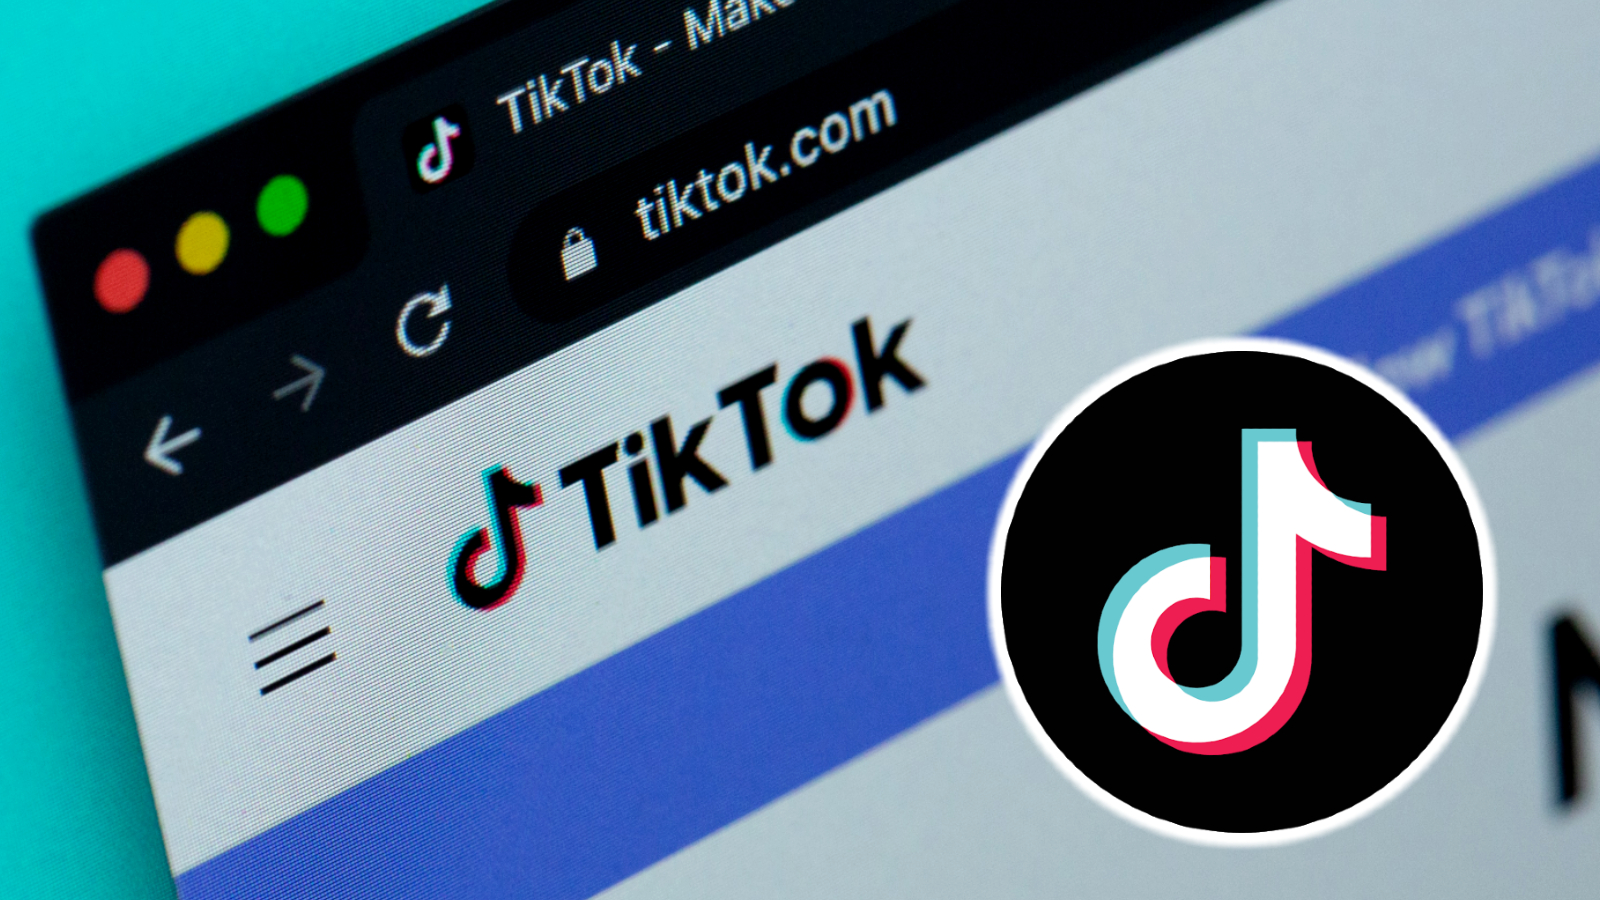 Situs web Tiktok di sebelah logo Tiktok